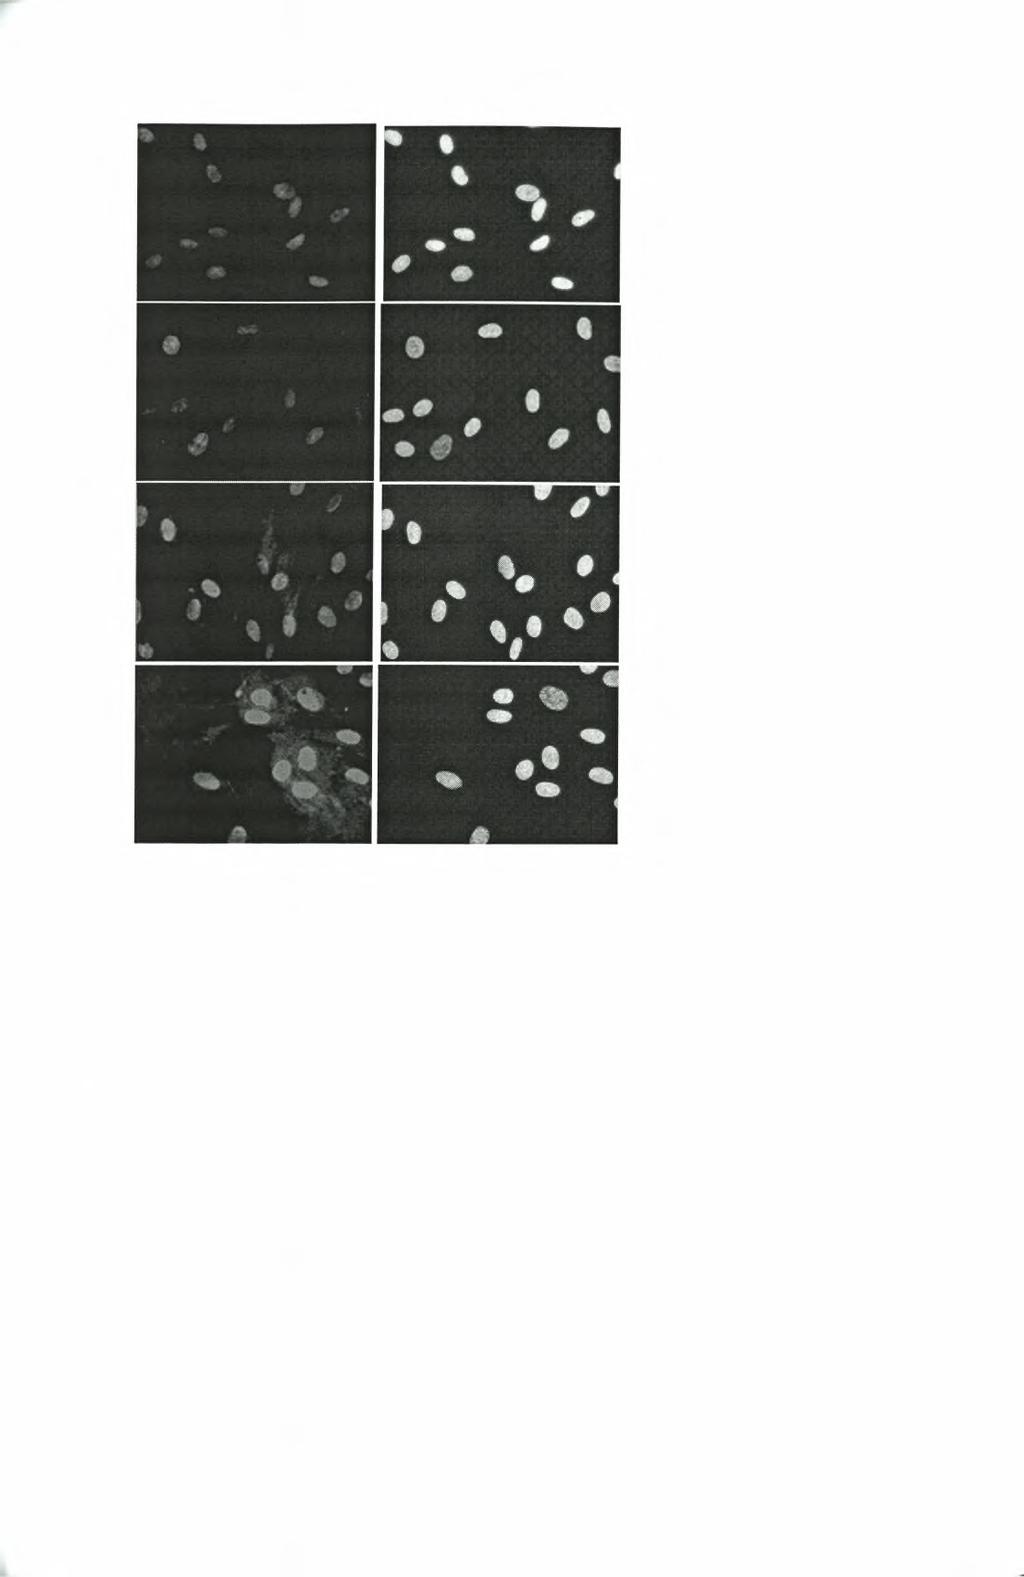 anti-hif-la DAPI Control CoCl2 FBS FBS + CoCl2 Εικ.17 : Ανοσοφθορισμός διαφοροποιημένων ΛΜΚΒ ανθρώπου με μονοκλωνικό αντίσωμα ποντικού κατά του HIF-la.